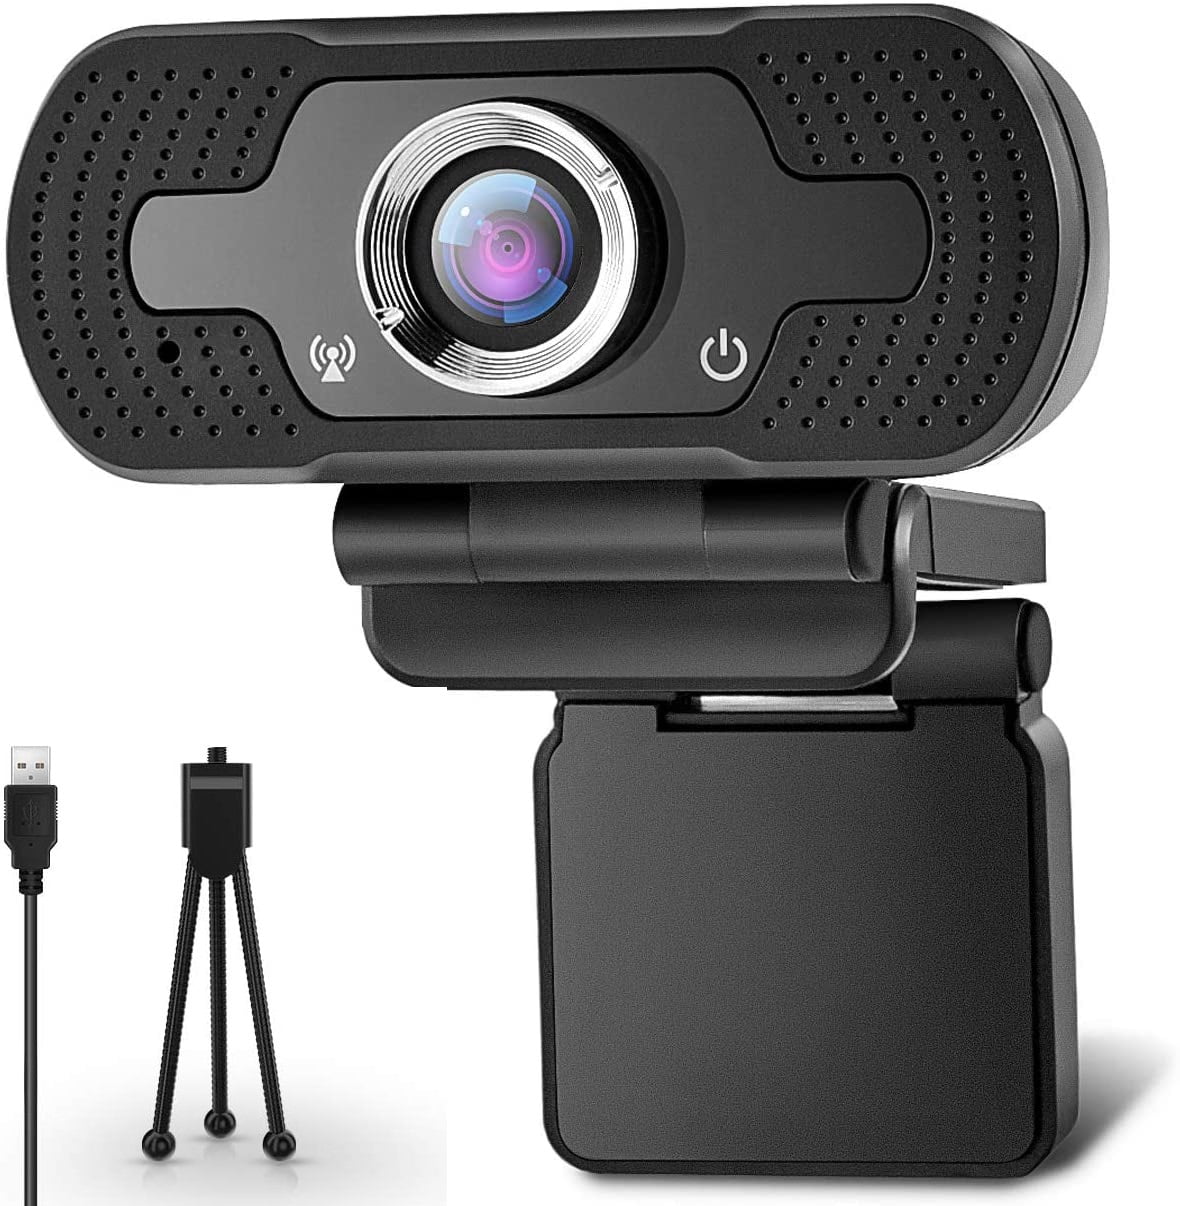 Mini USB 2.0 PC Camera HD Webcam Camera Web Cam For Laptop Desktops FfBHCA 